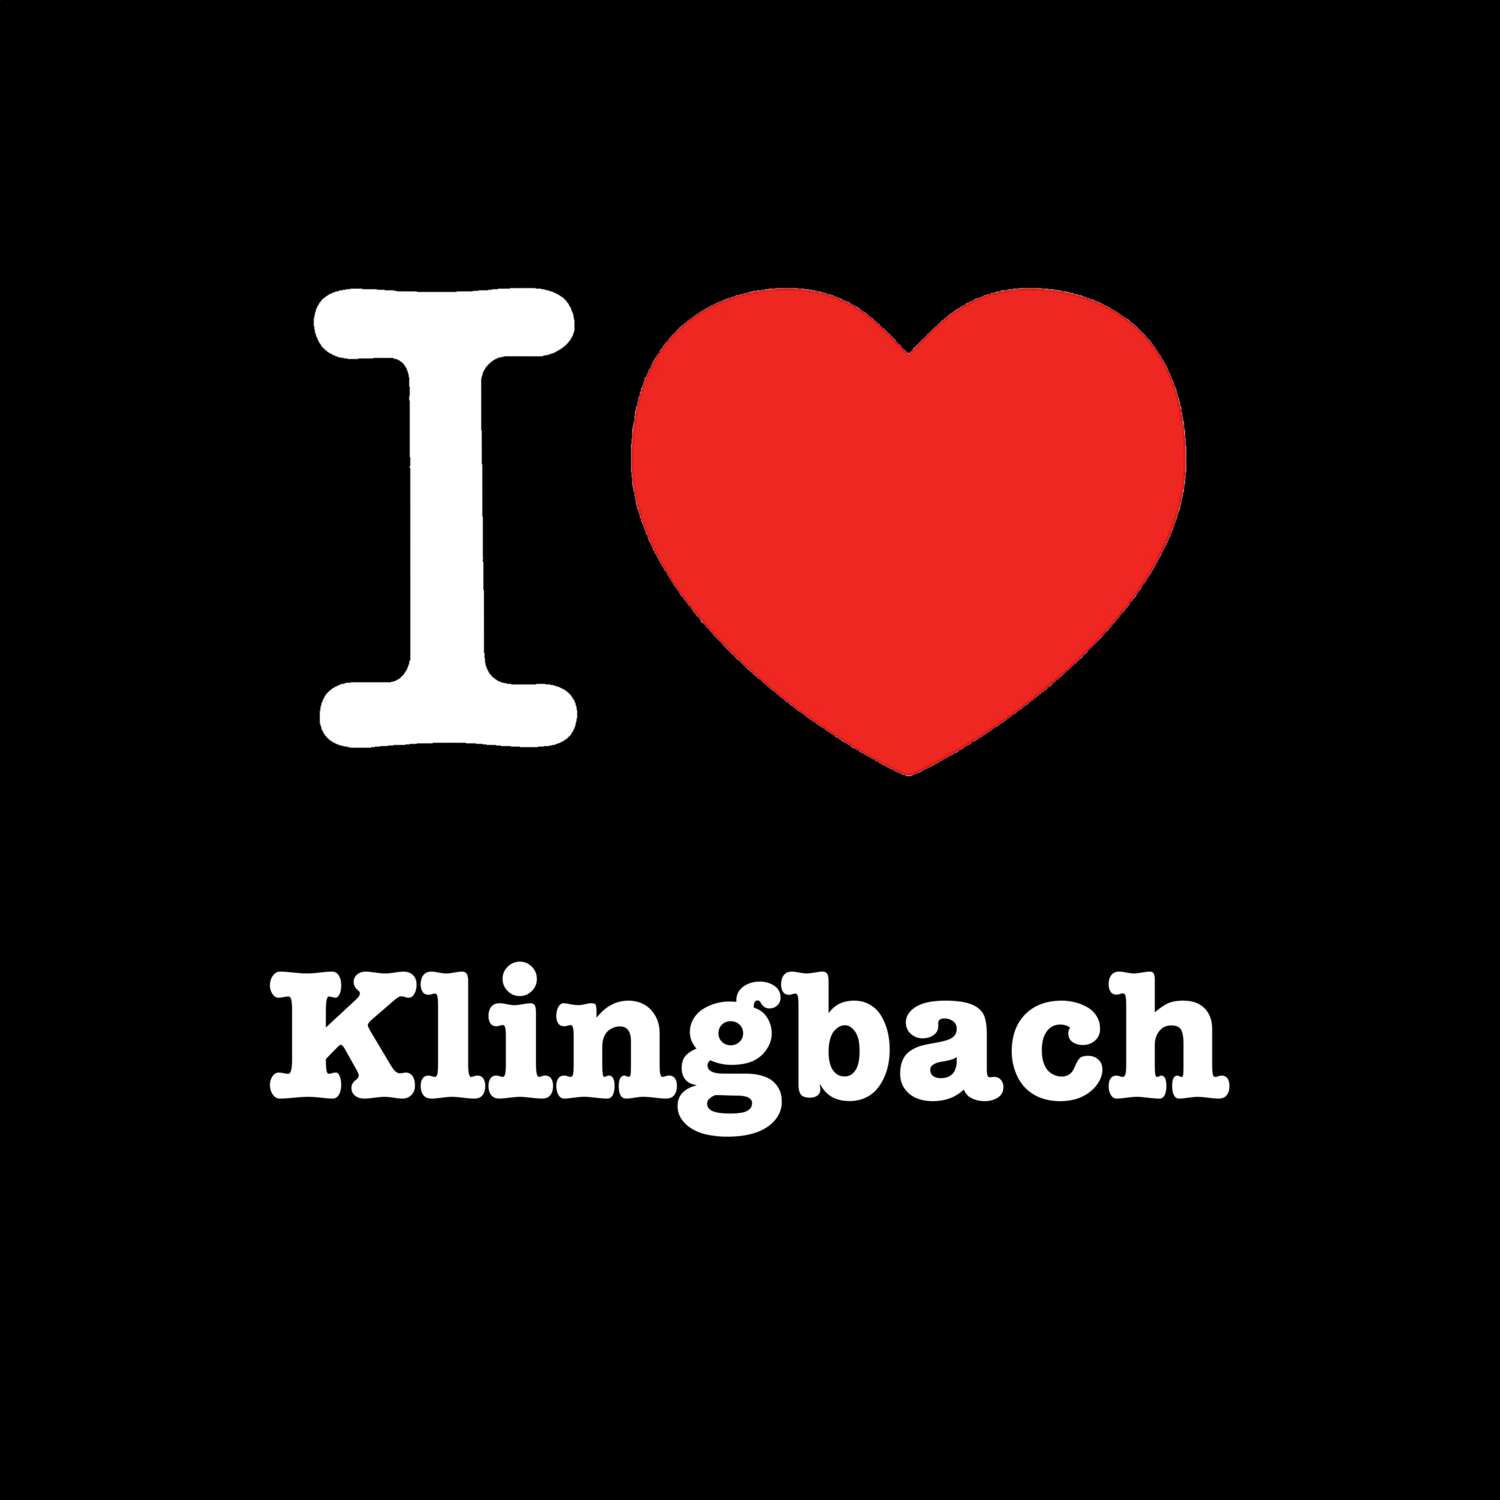 Klingbach T-Shirt »I love«